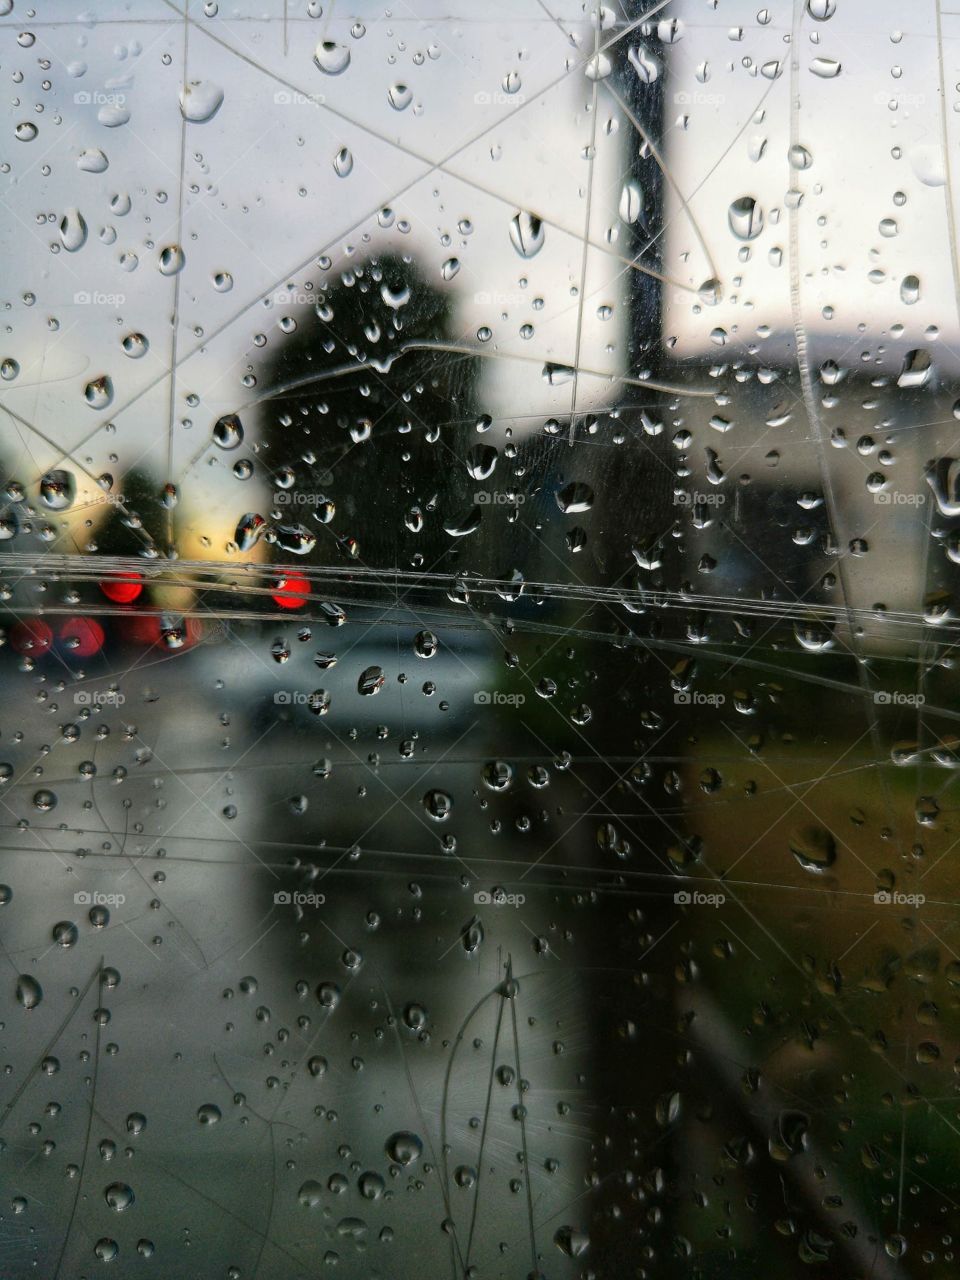 Raindrops on a bus window 